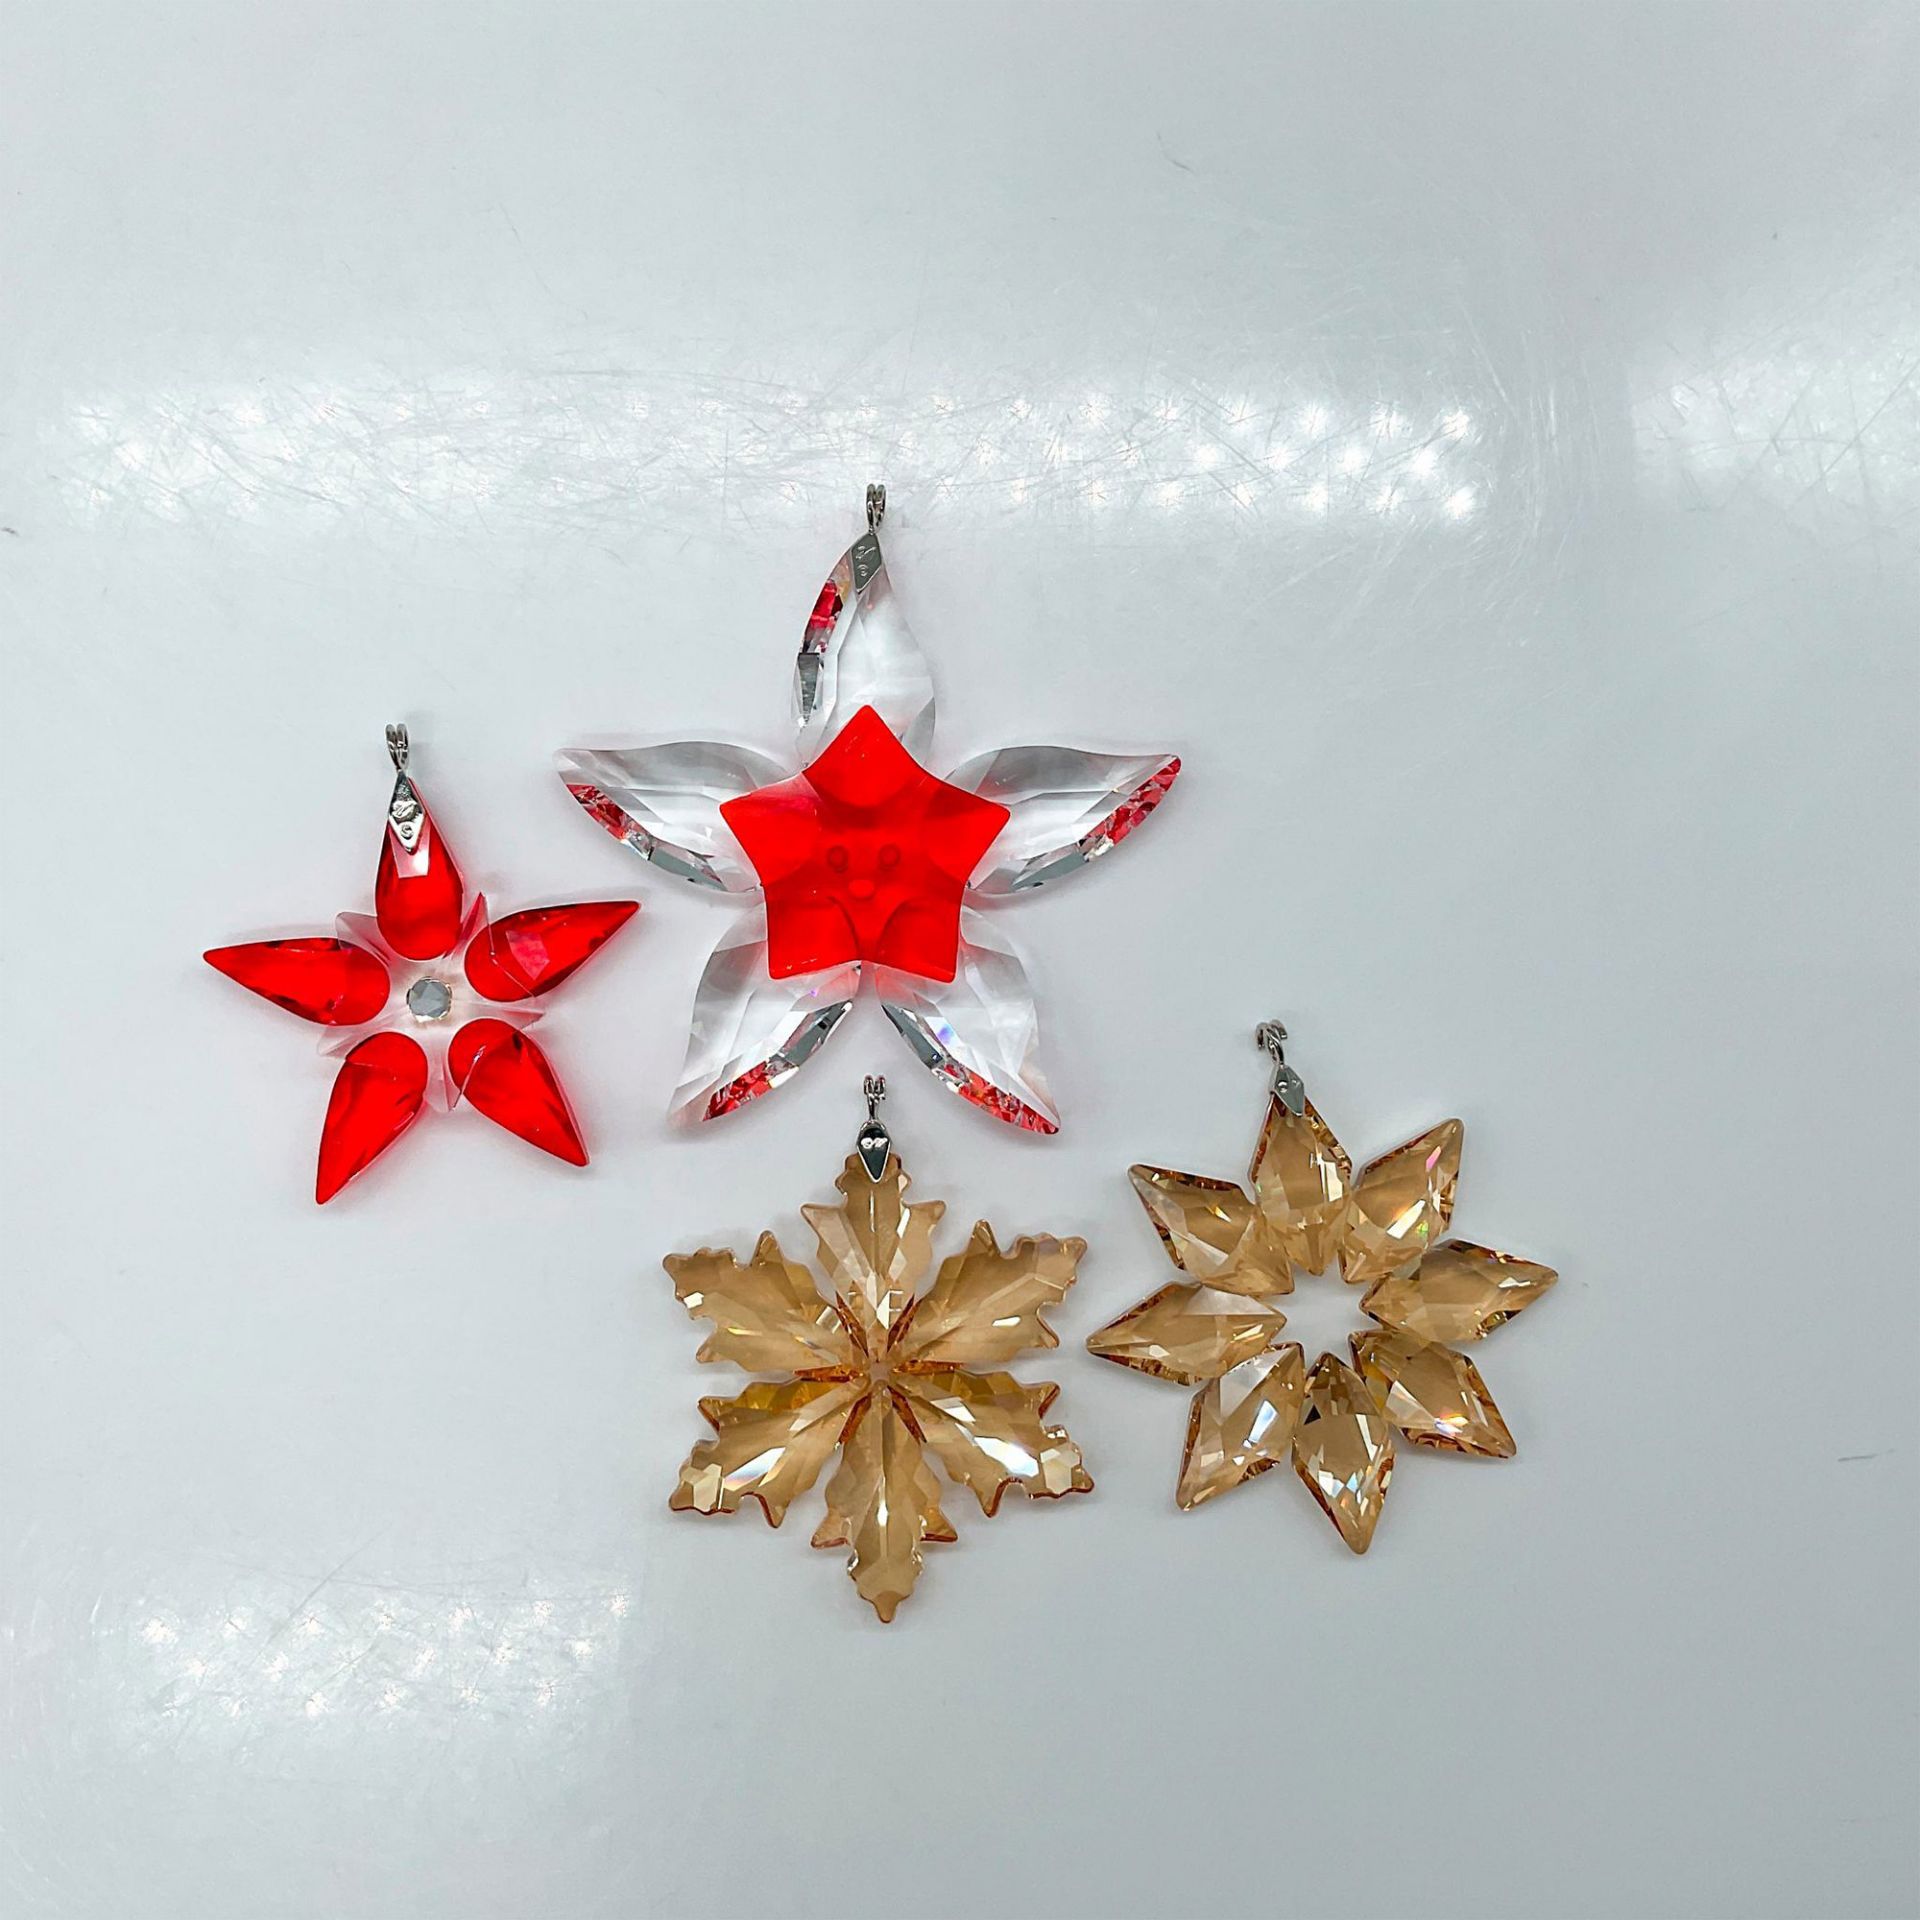 4pc Swarovski Crystal Christmas Ornaments - Image 2 of 3